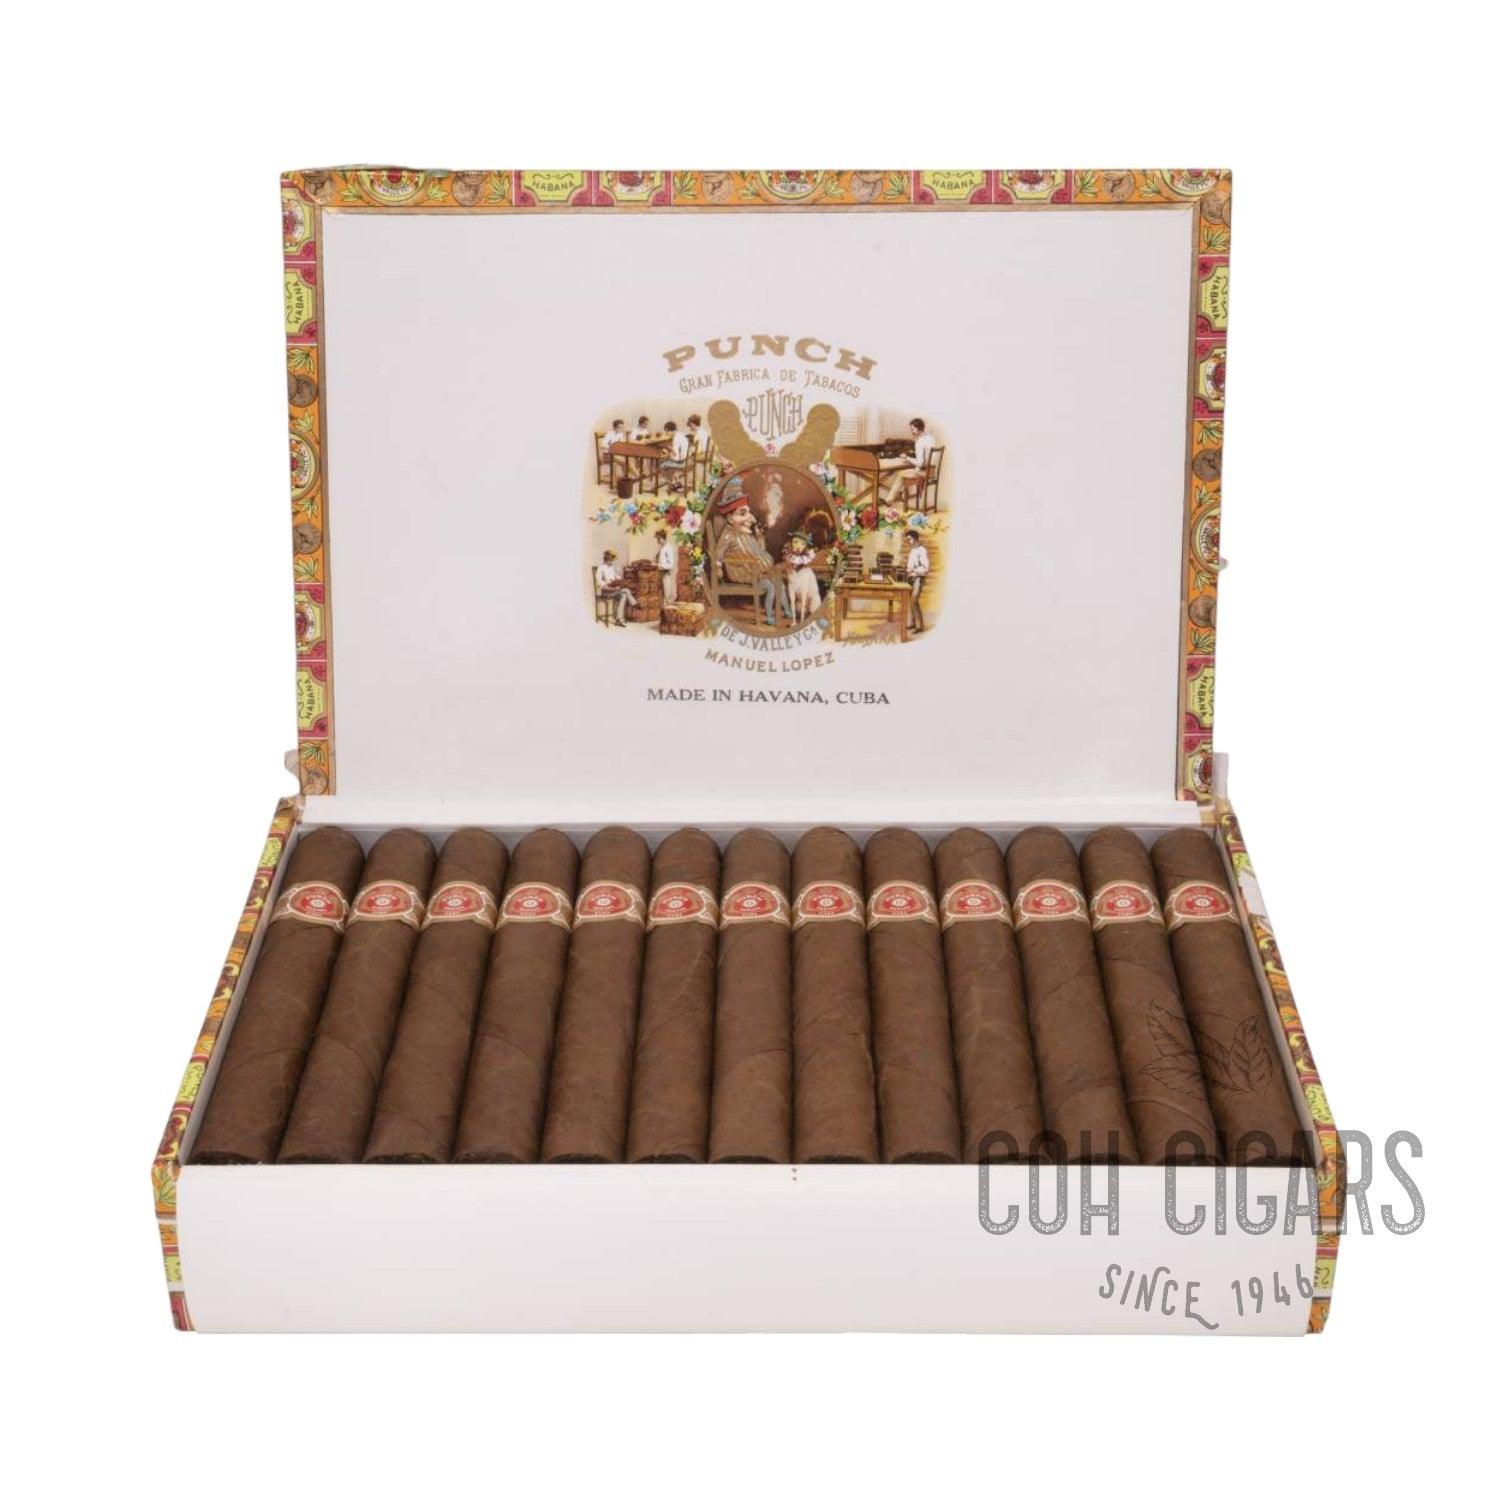 Punch Cigar | Punch | Box 25 - hk.cohcigars